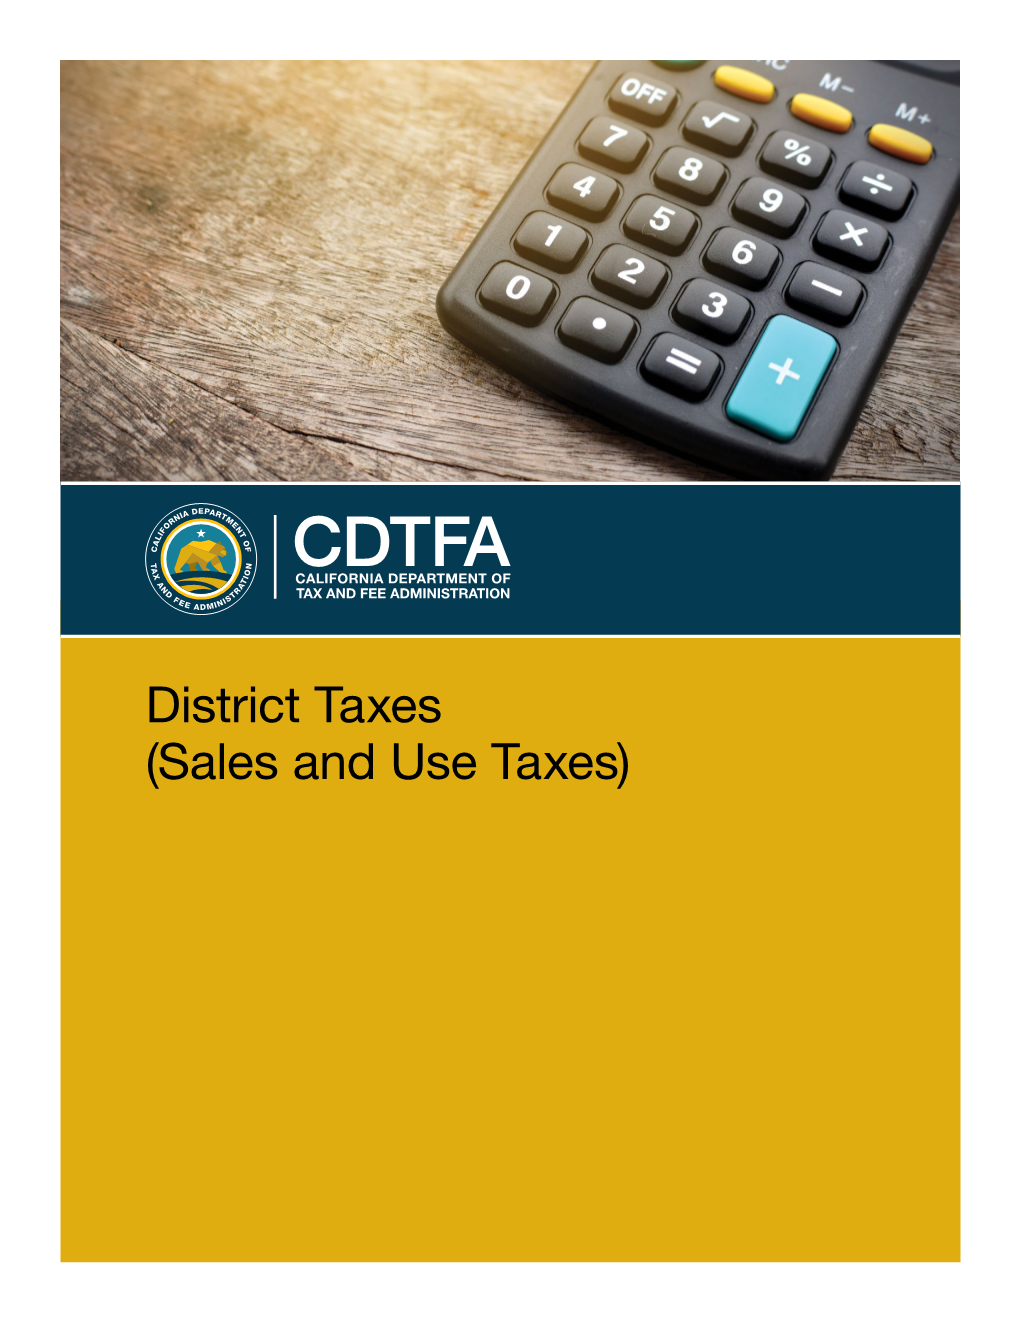 Publication 44, District Taxes